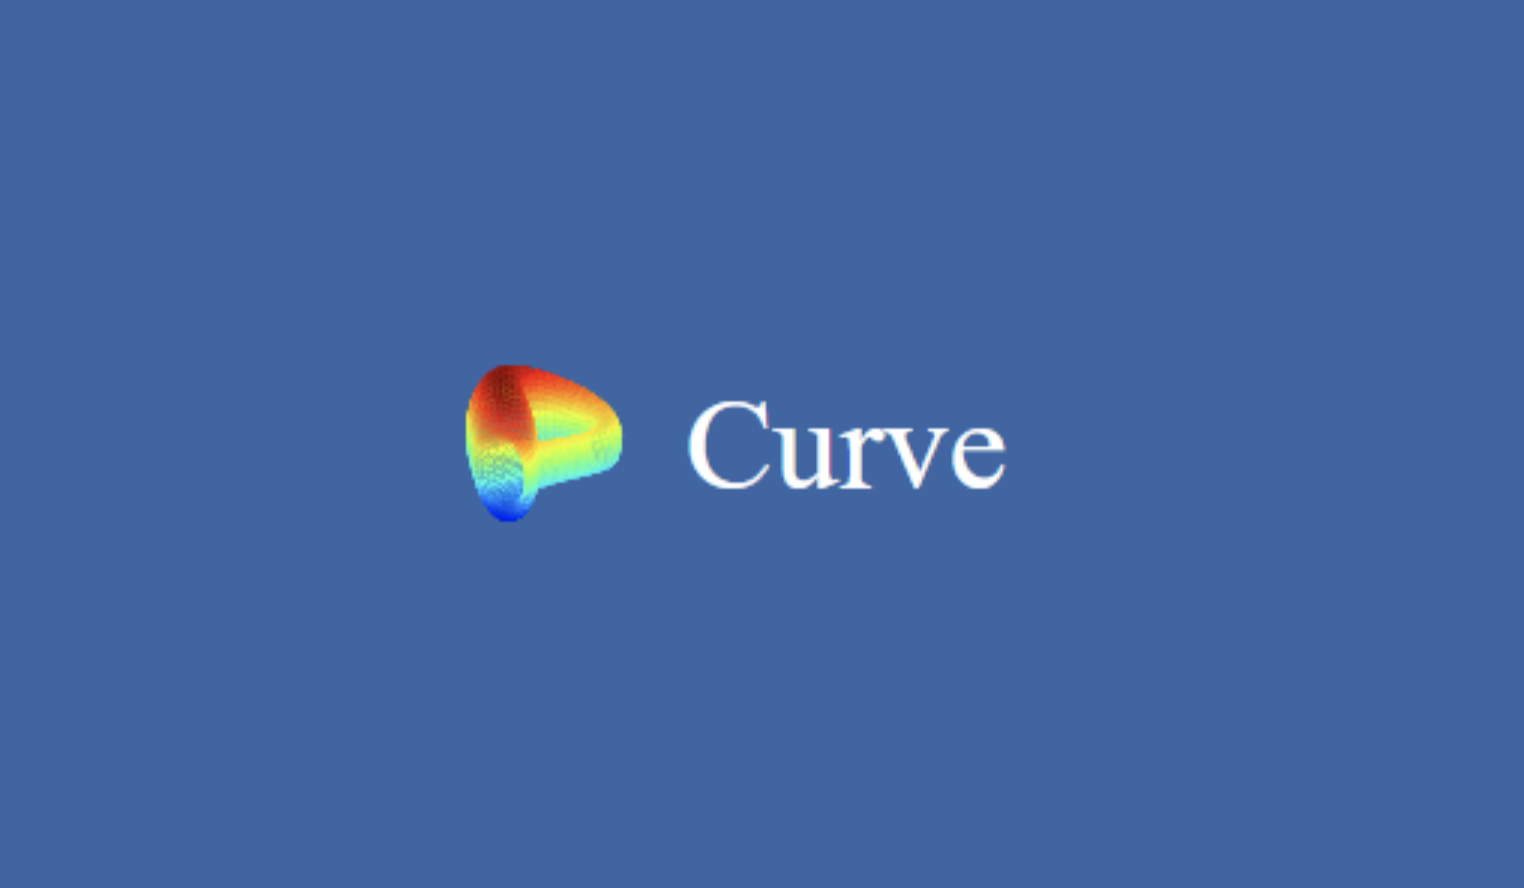 Curve ประกาศเปิดตัว Governance Token หรือ CRV Token เป็น ...